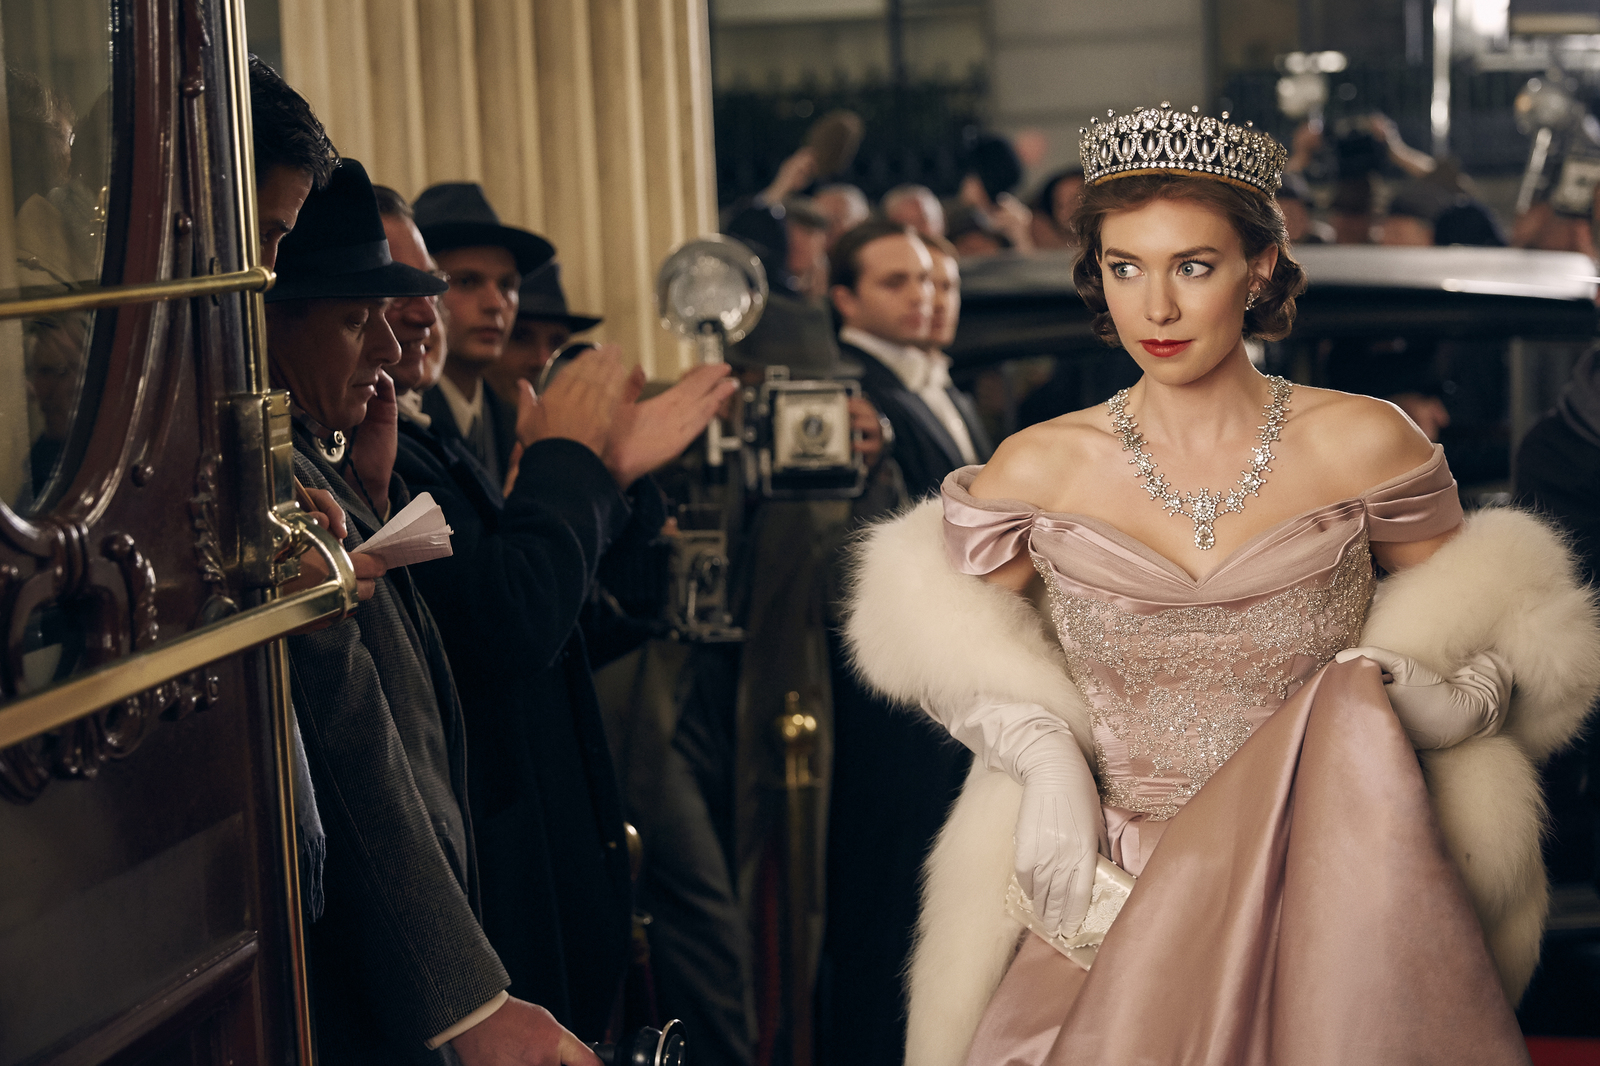 Series The Crown | Crown in pictures - The crown, Crown, Serials, Netflix, Great Britain, Queen Elizabeth II, Longpost